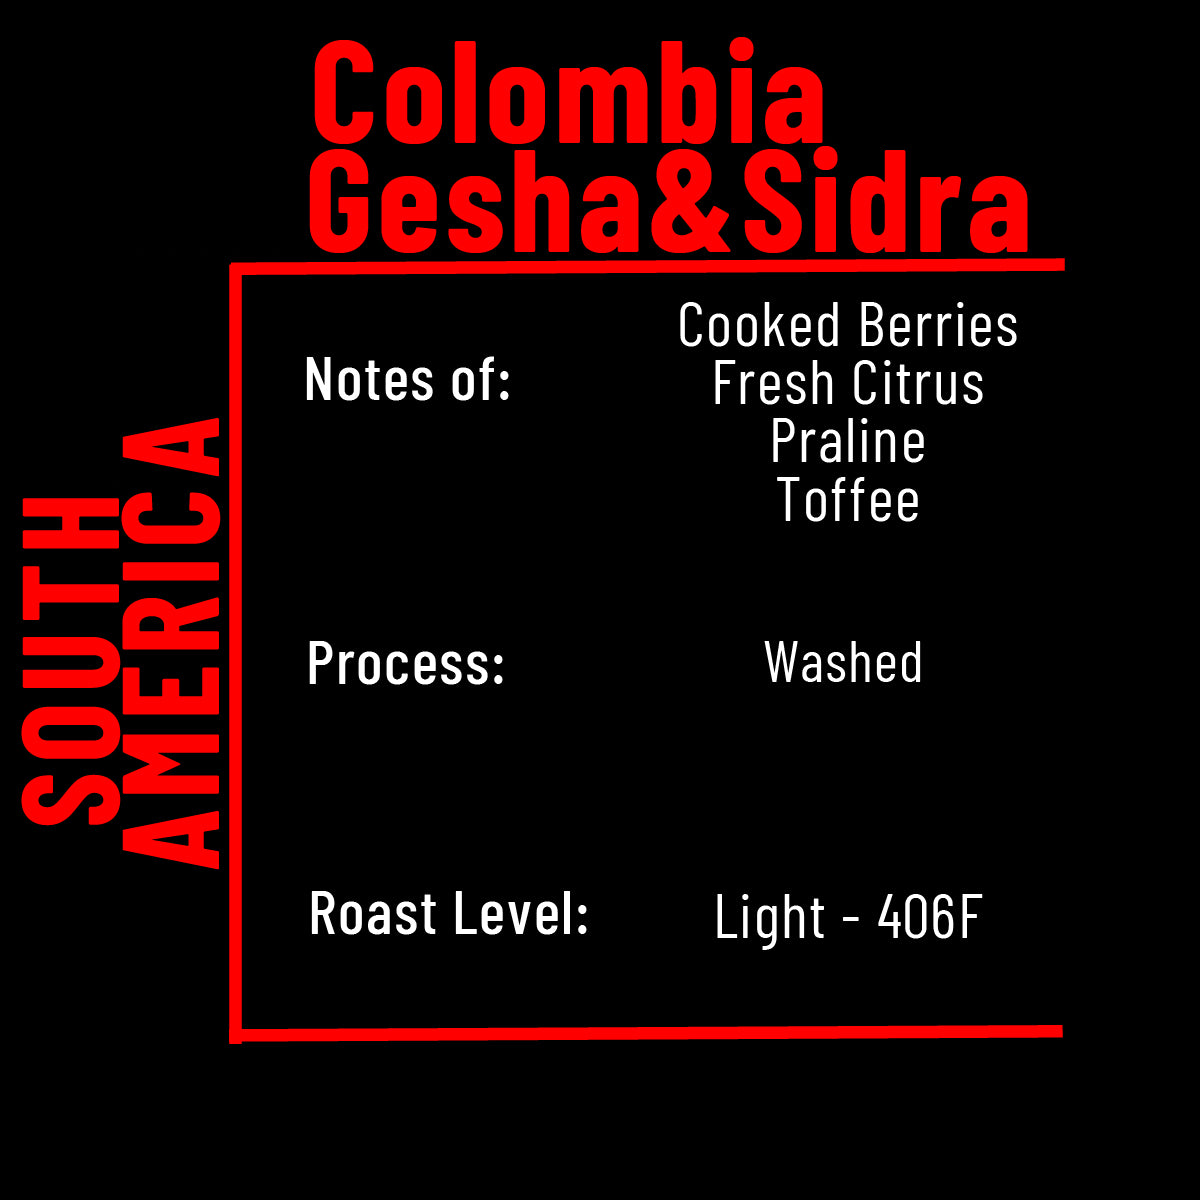 Coffee - Colombia Gesha & Sidra